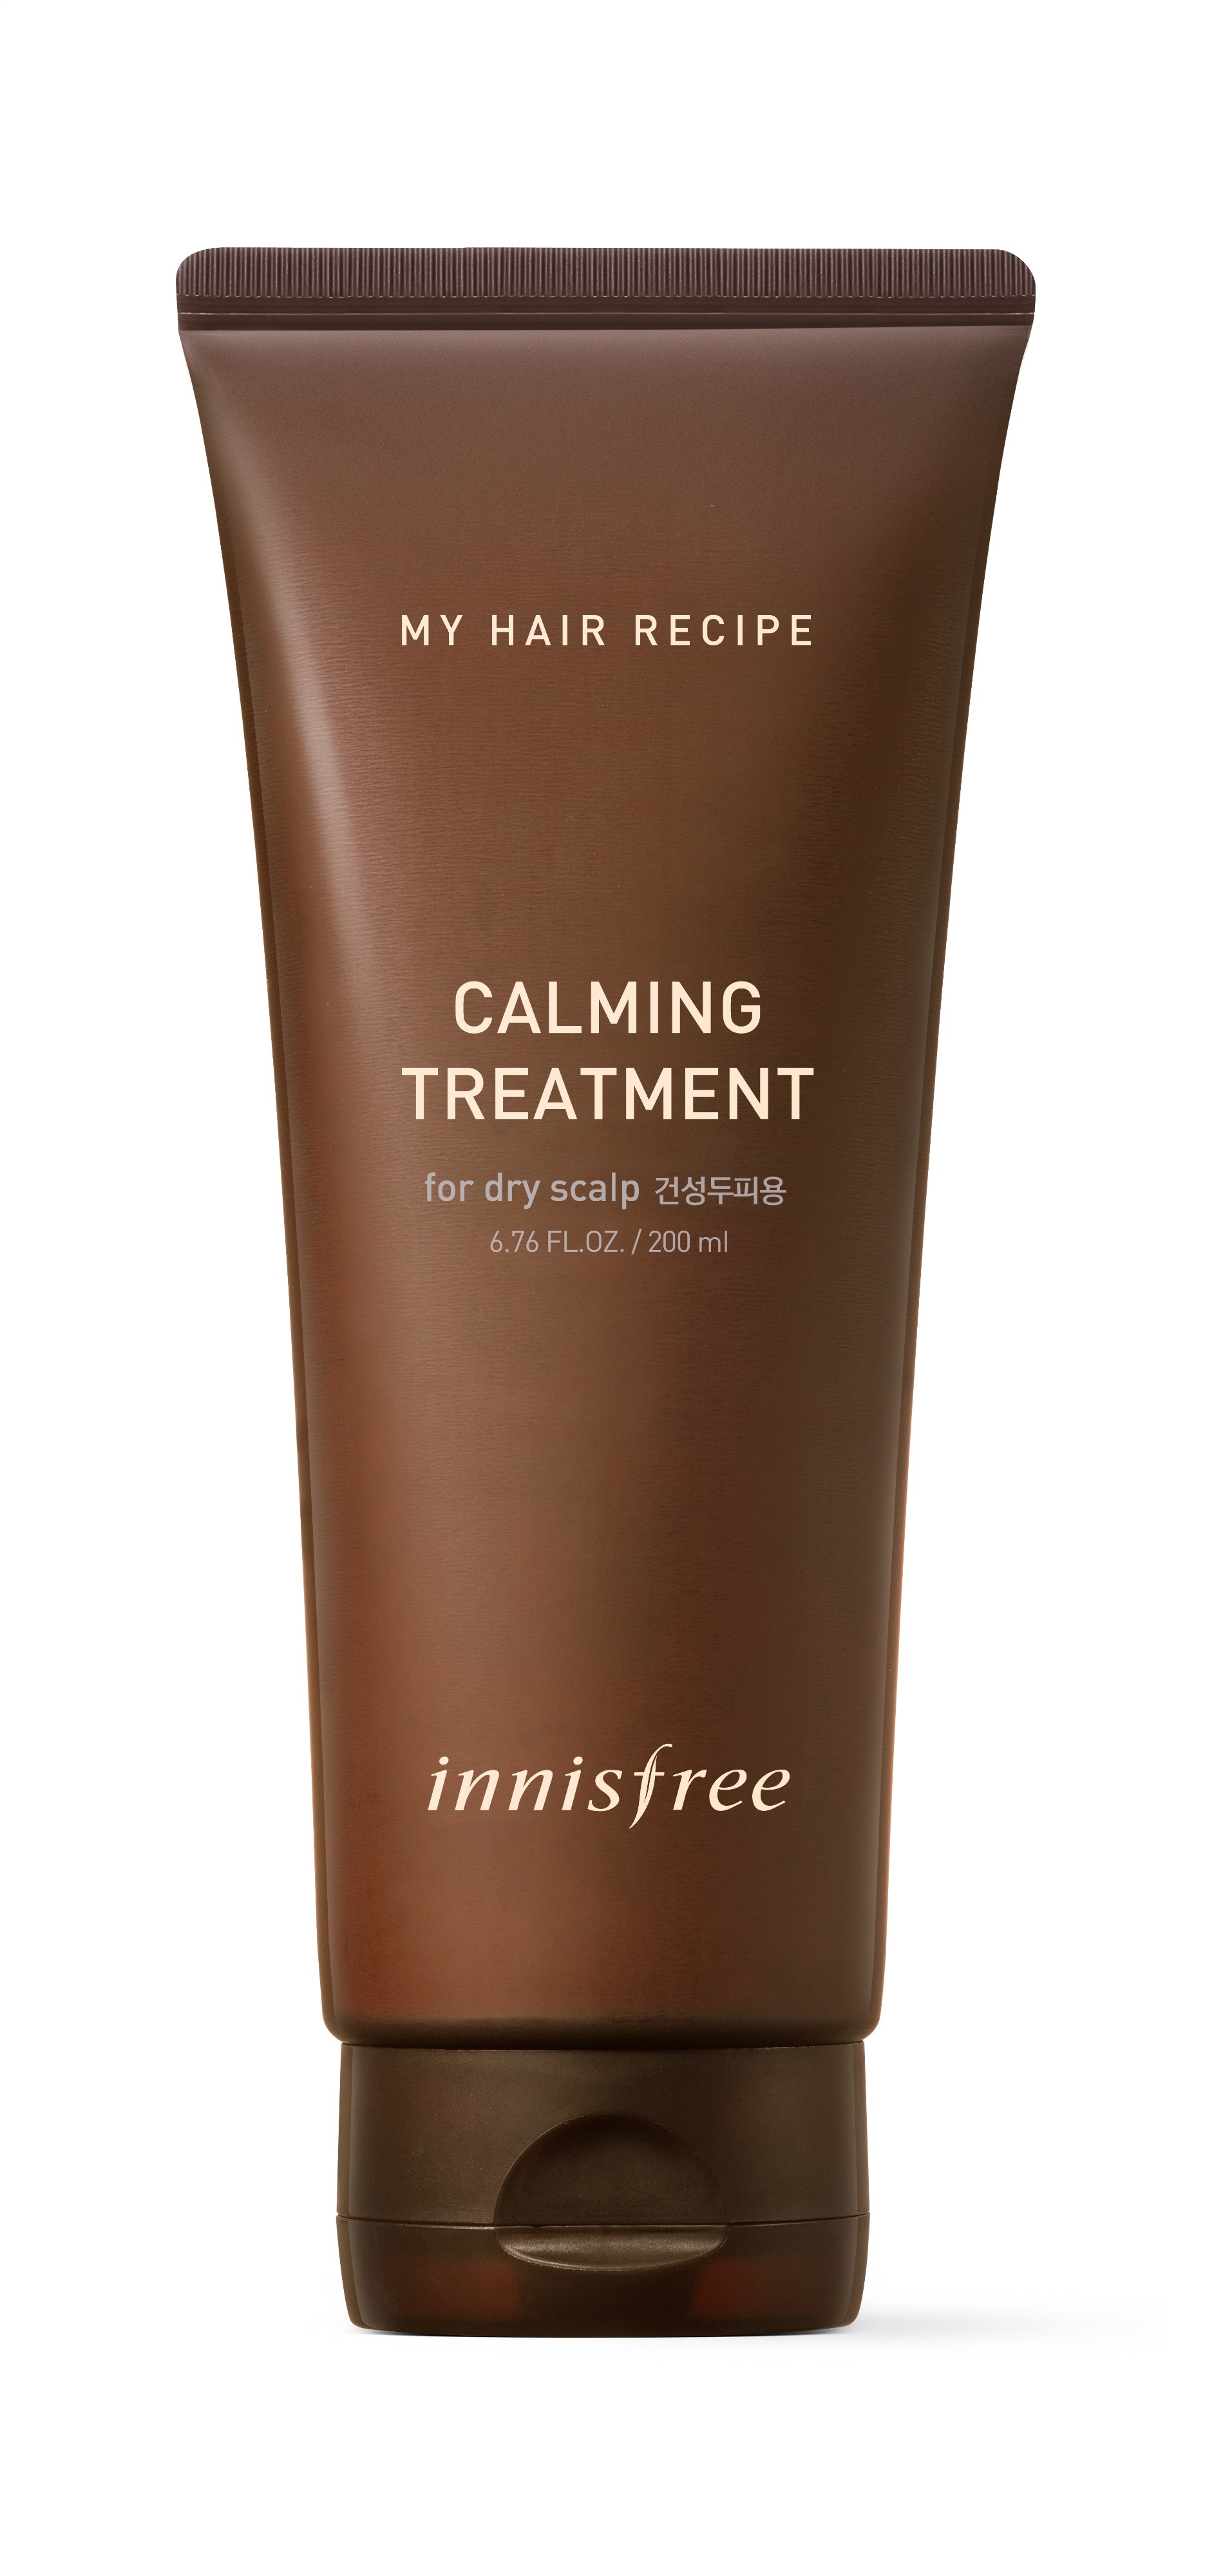 innisfree My Hair Recipe Calming Treatment (RM58.00/200ml)-Pamper.my